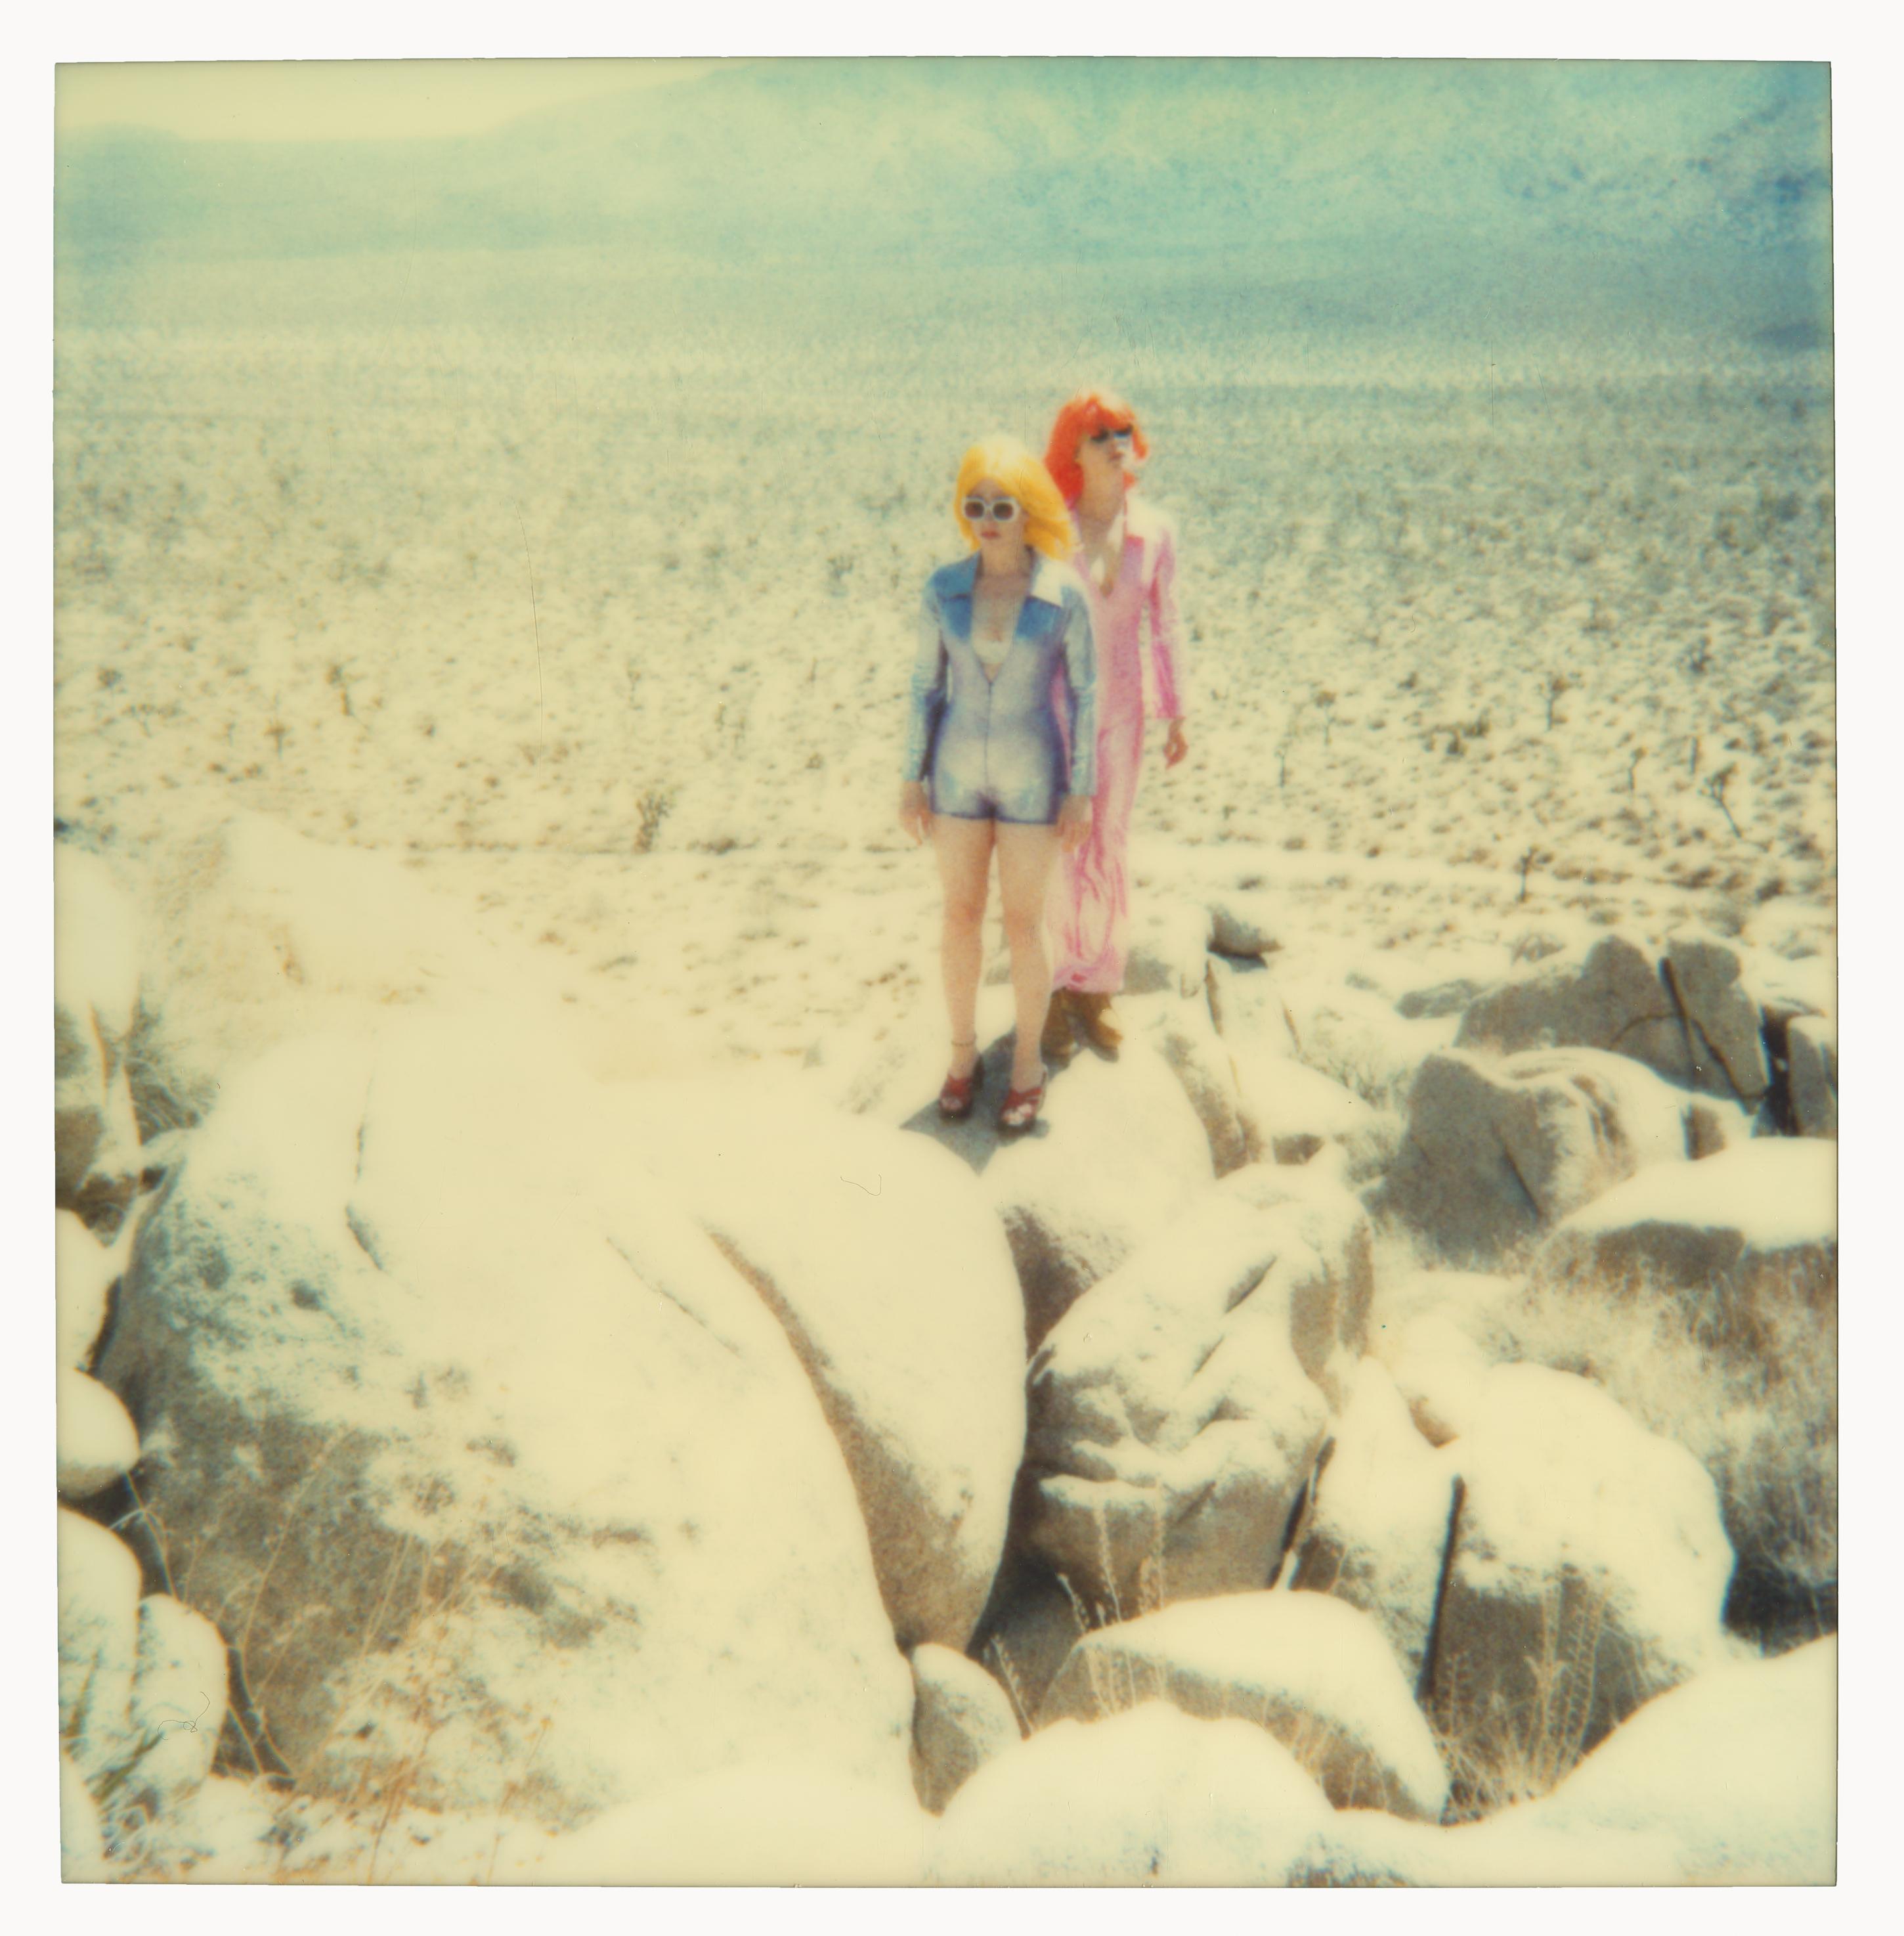 Stefanie Schneider Landscape Photograph - On the Rocks (Long Way Home), analog, mounted, 58x57cm, Edition 2/10 